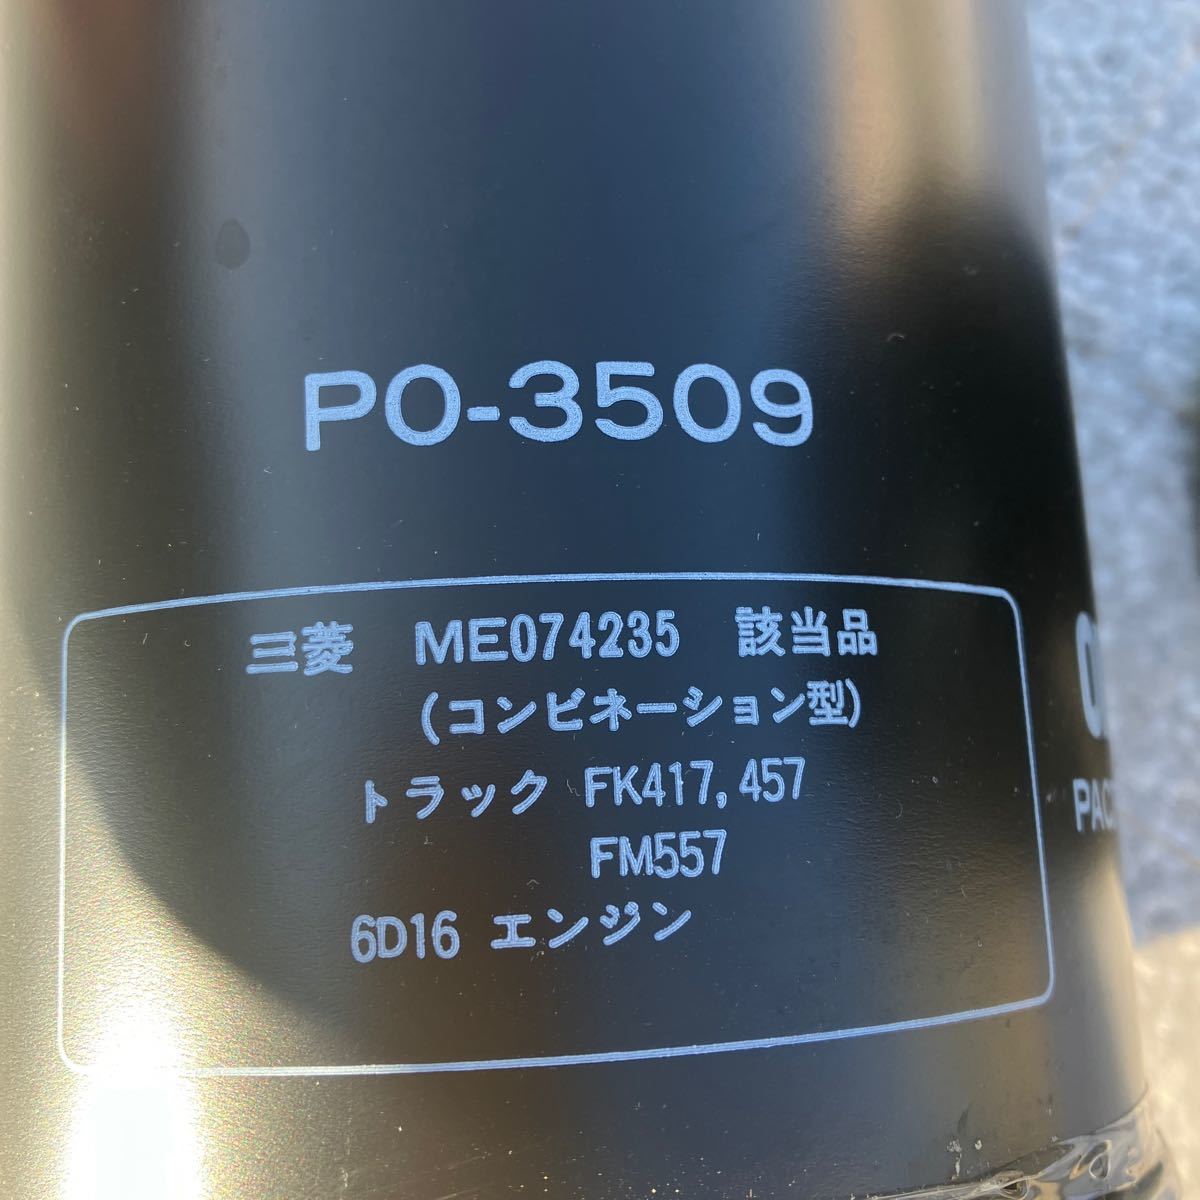  Mitsubishi Fighter масляный фильтр масляный фильтр 6D16 оригинальный неоригинальный товар 2 шт. комплект 